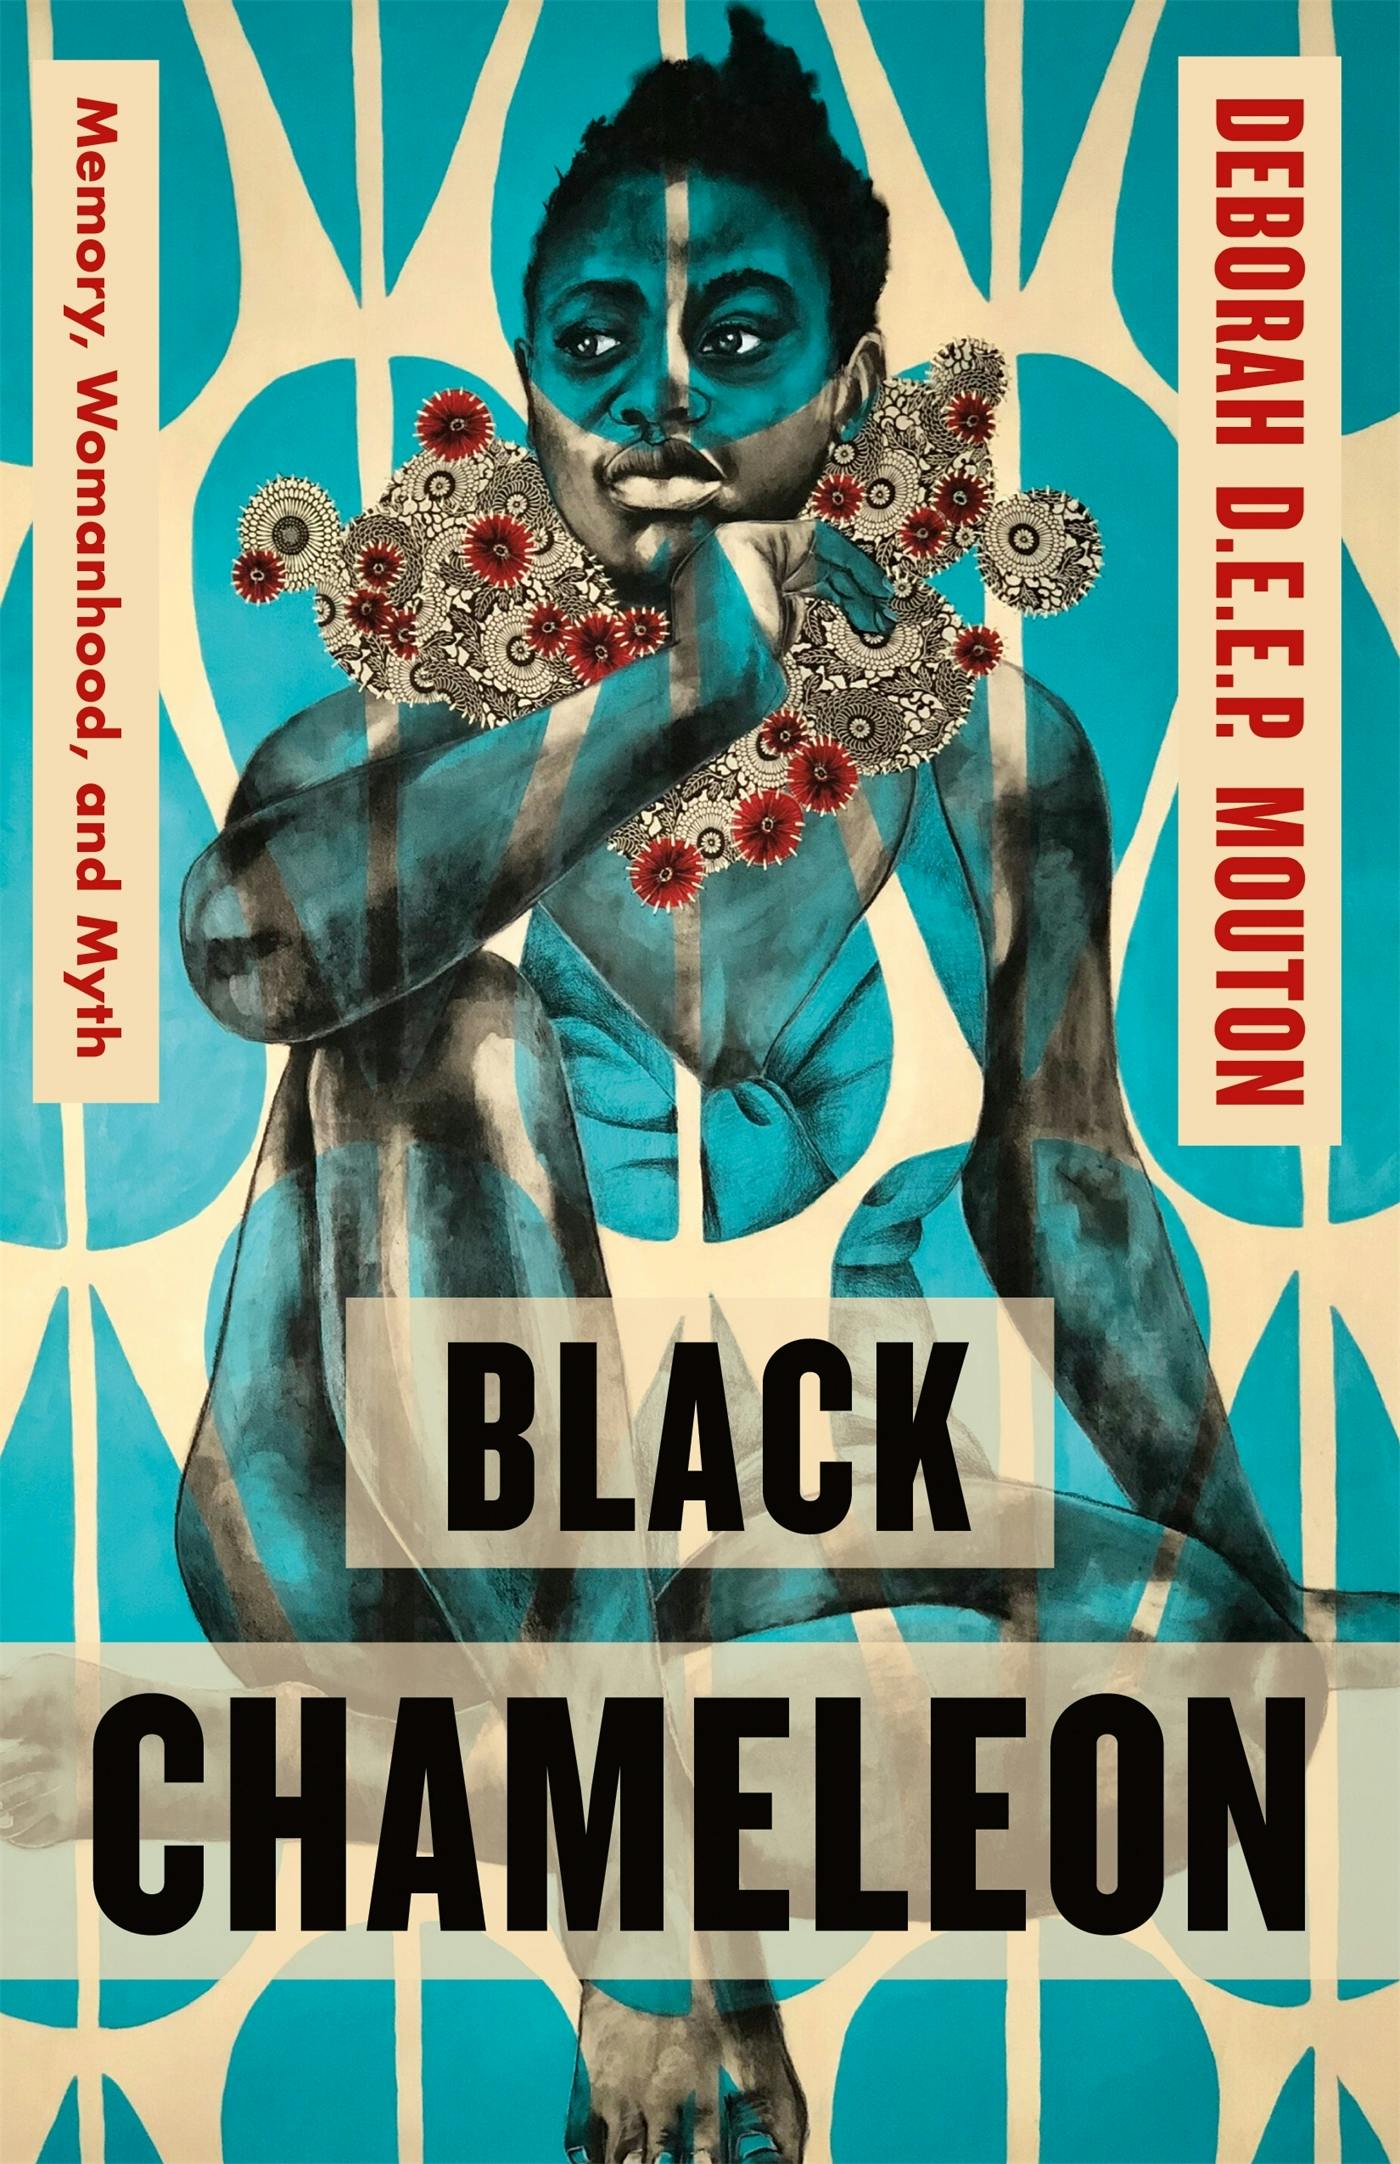 Black Chameleon by Deborah D.E.E.P. Mouton